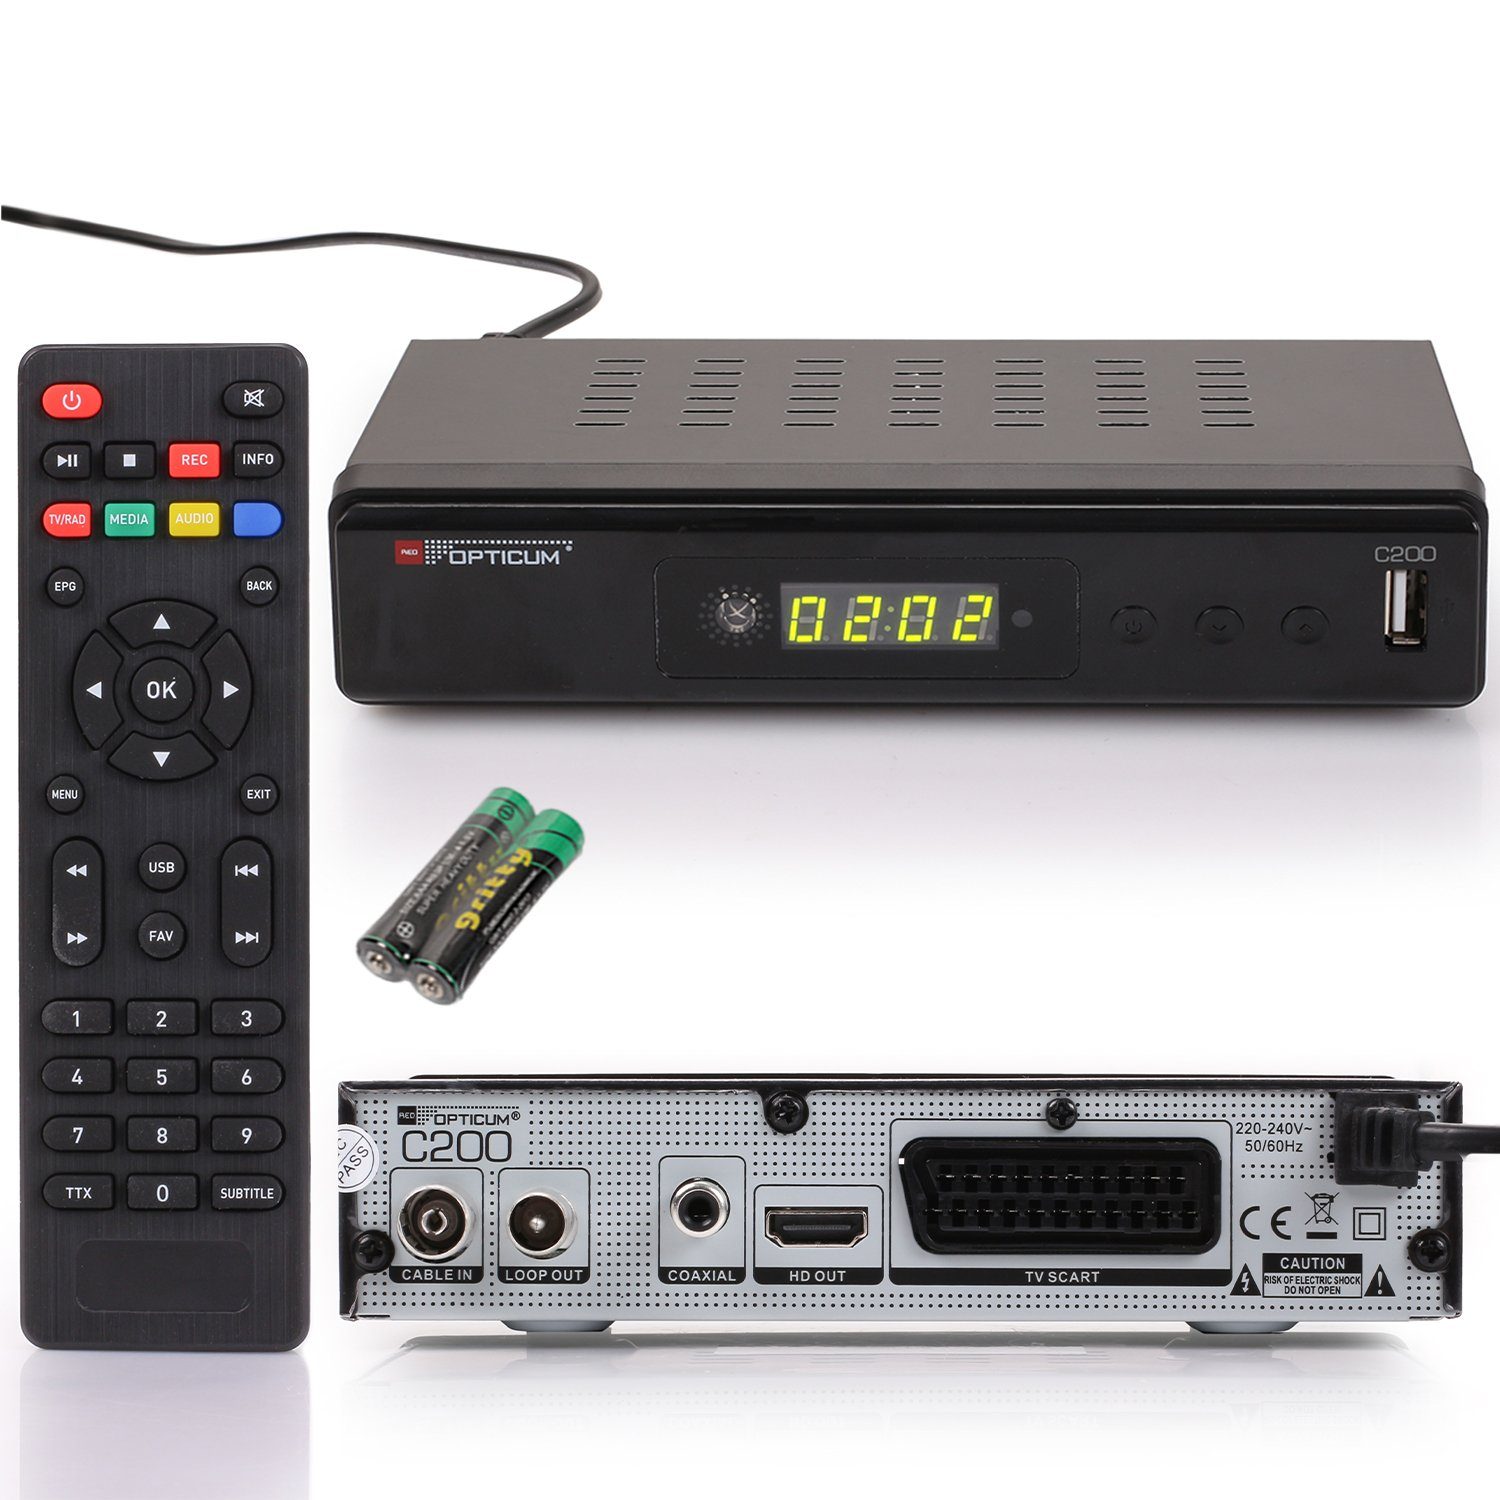 RED OPTICUM C200 Full HD USB Display) - Receiver Kabel-Receiver (EPG - Audio, Coaxial 4-stelliges Aufnahmefunktion HDMI - DVB-C - SCART mit